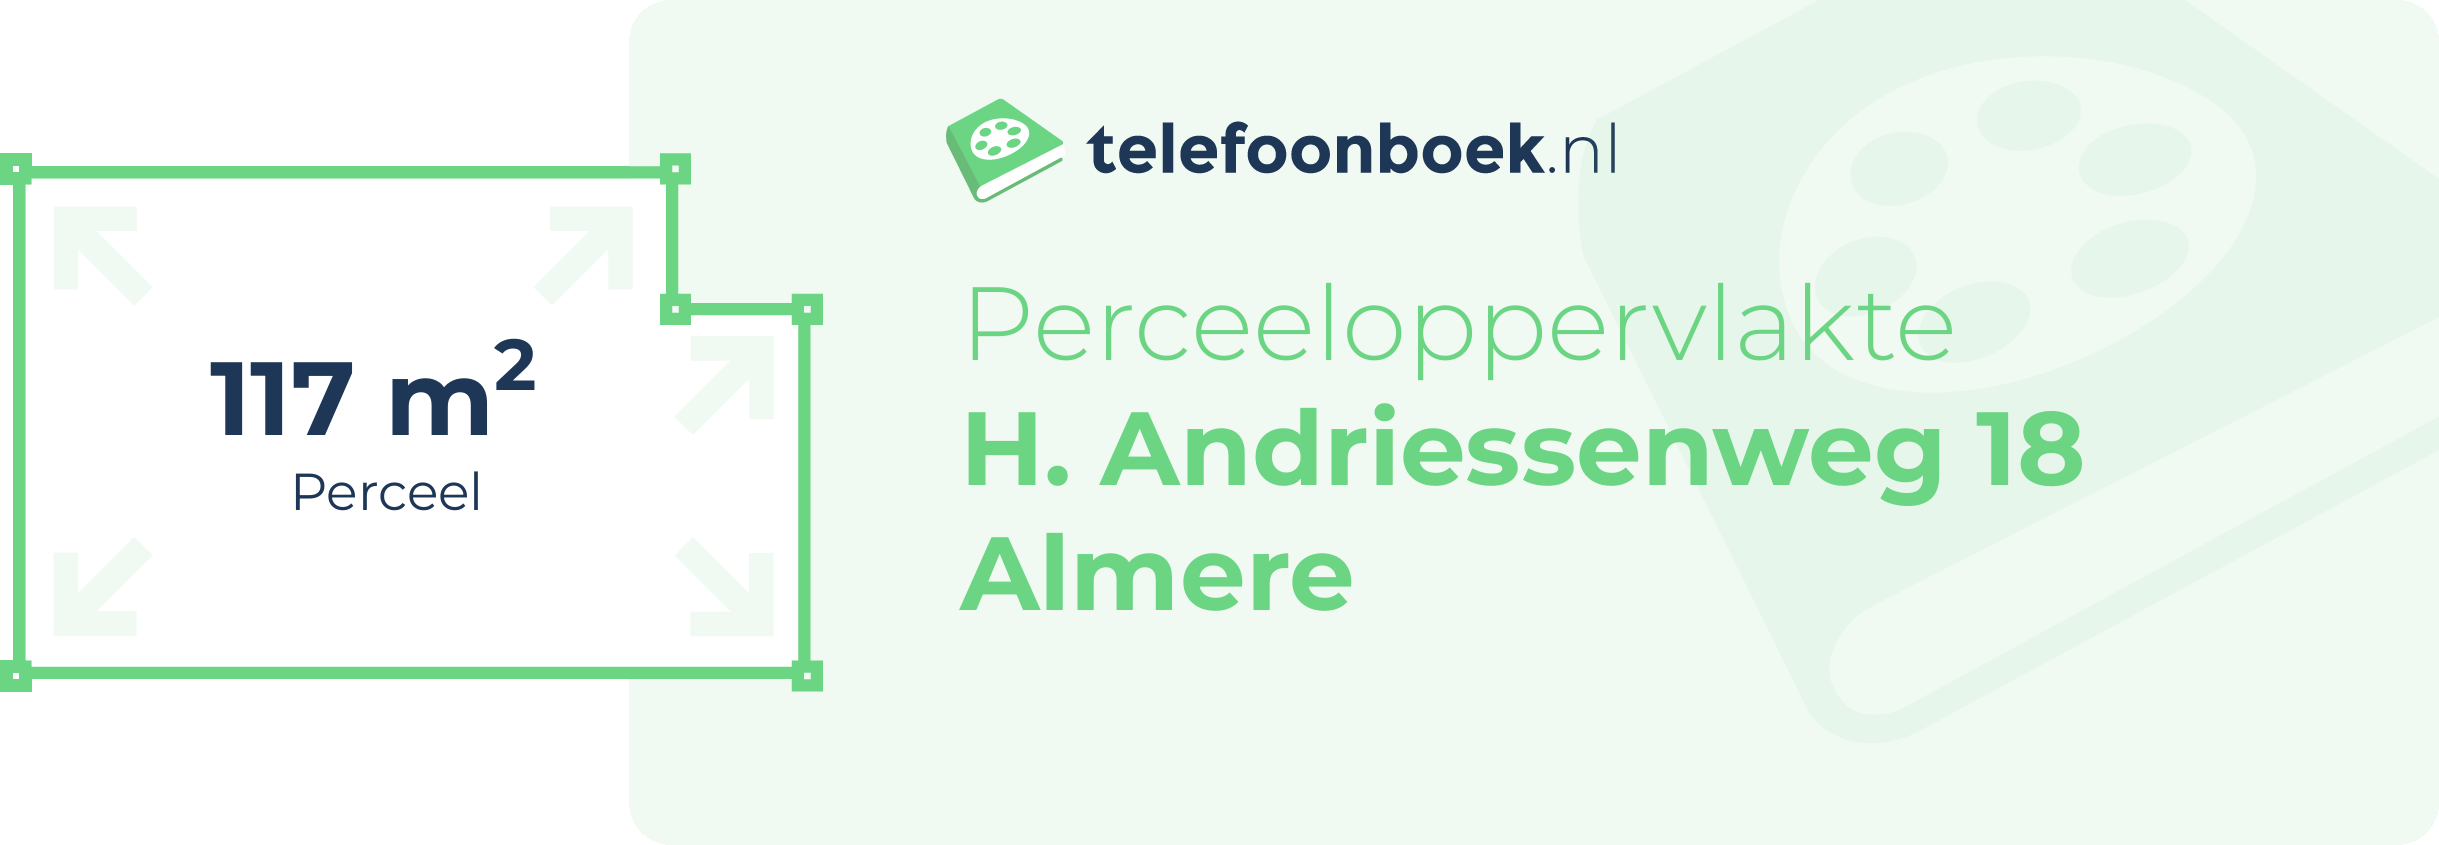 Perceeloppervlakte H. Andriessenweg 18 Almere